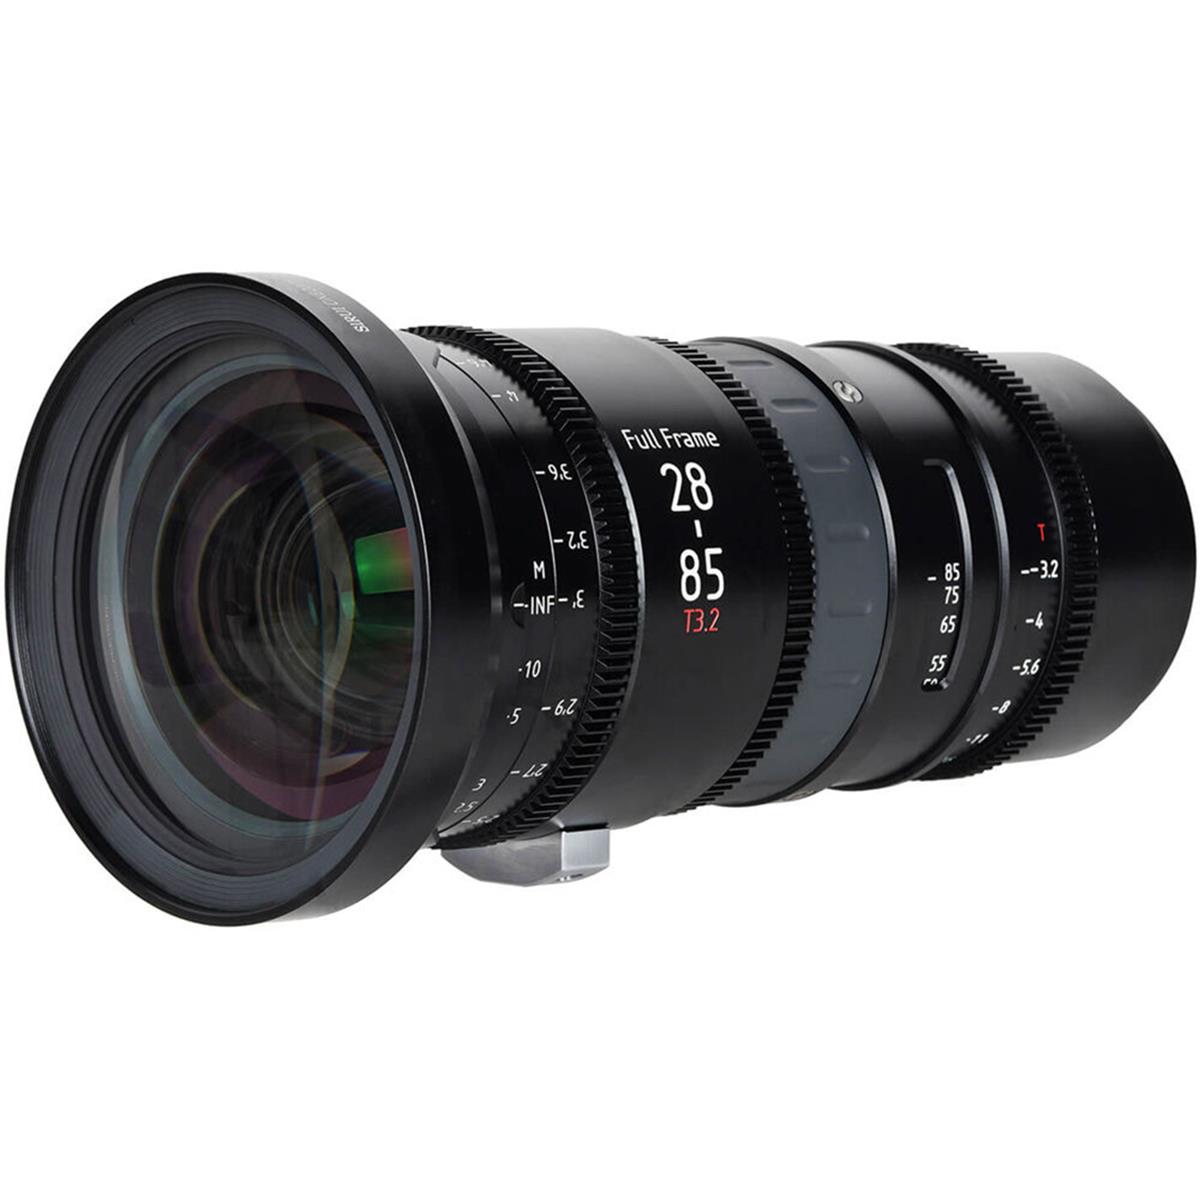 Image of Swarovski Optik Sirui Jupiter 28-85mm T3.2 Macro Cine Lens for Canon EF